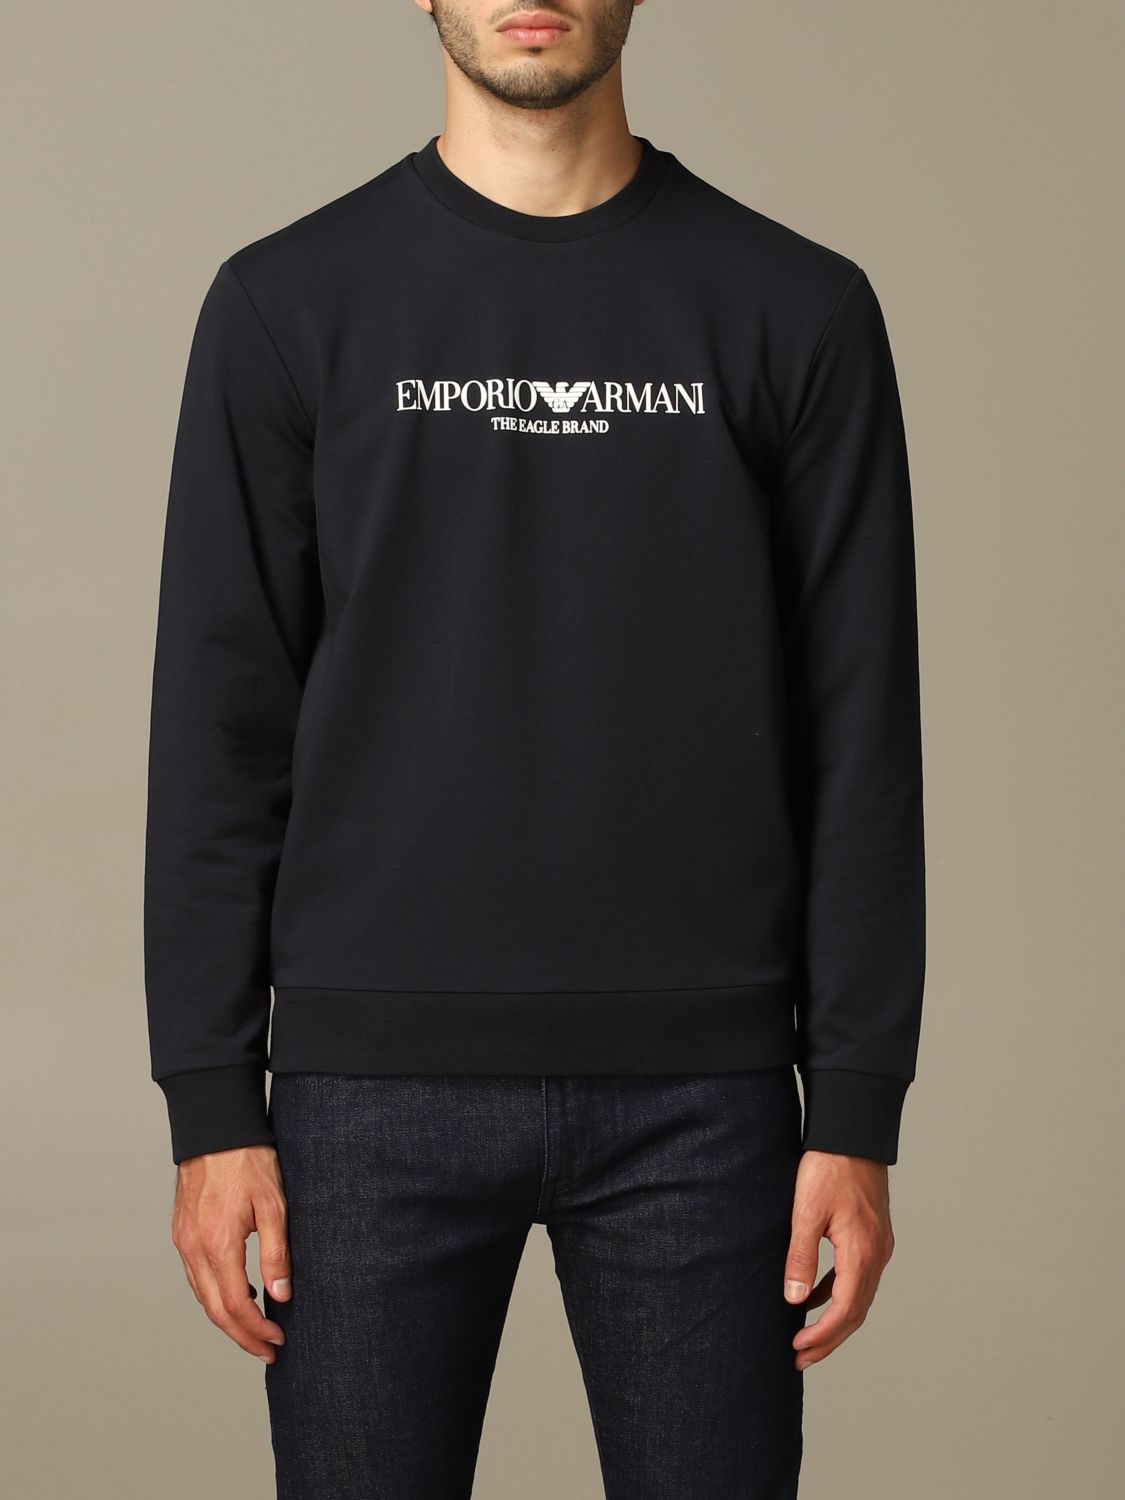 Emporio Armani sweatshirt for man